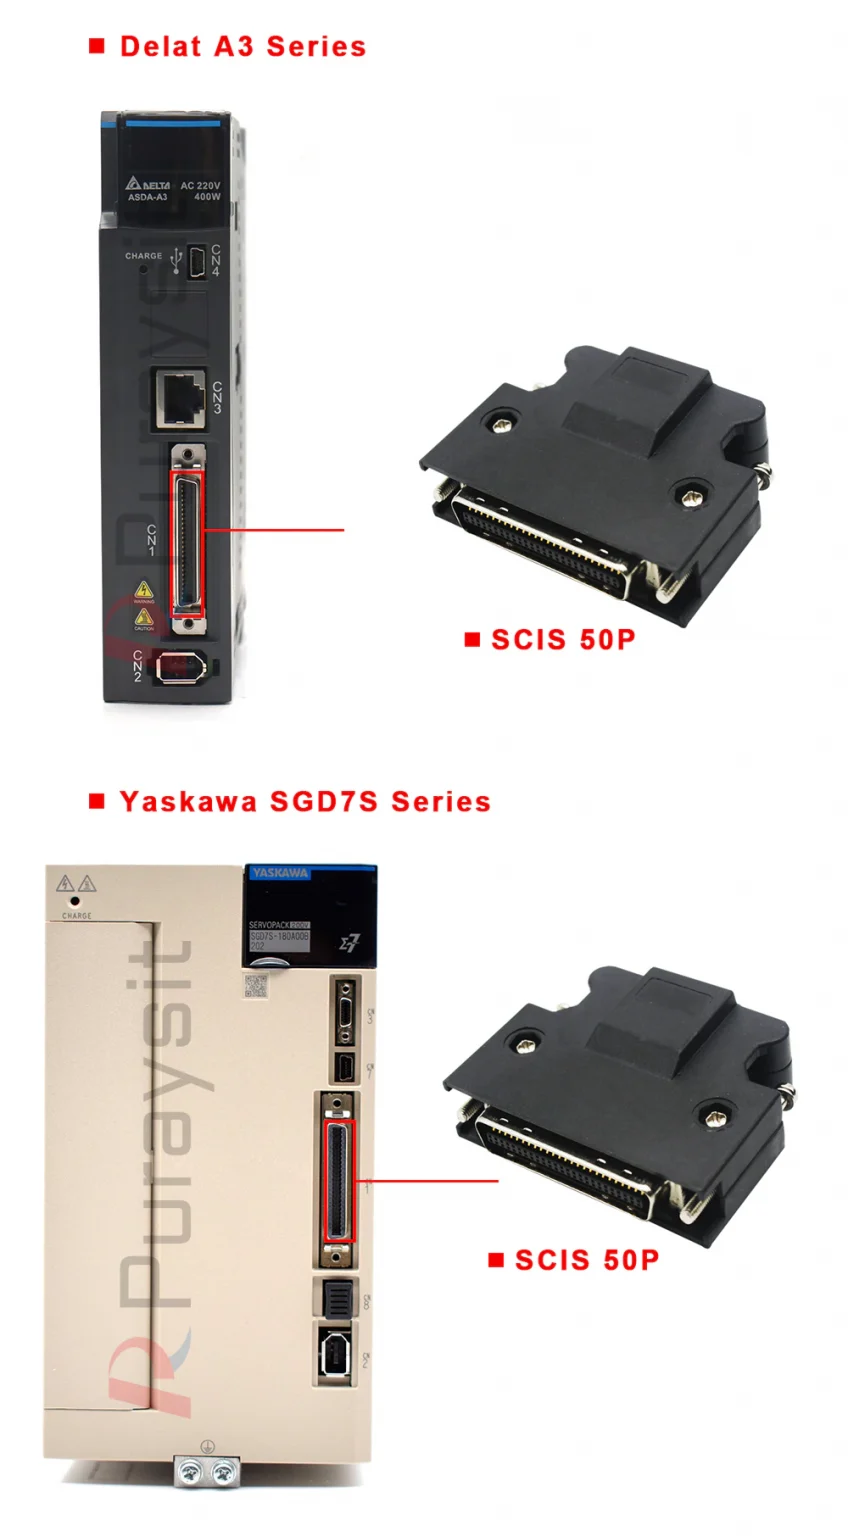 MDR SM-SCSI-connector 14P / 20P / 26P / 36P / 50P SCSI Plug Driver Servo Connector Panasonic Delta Use Connector Mitsubishi Yaskawa